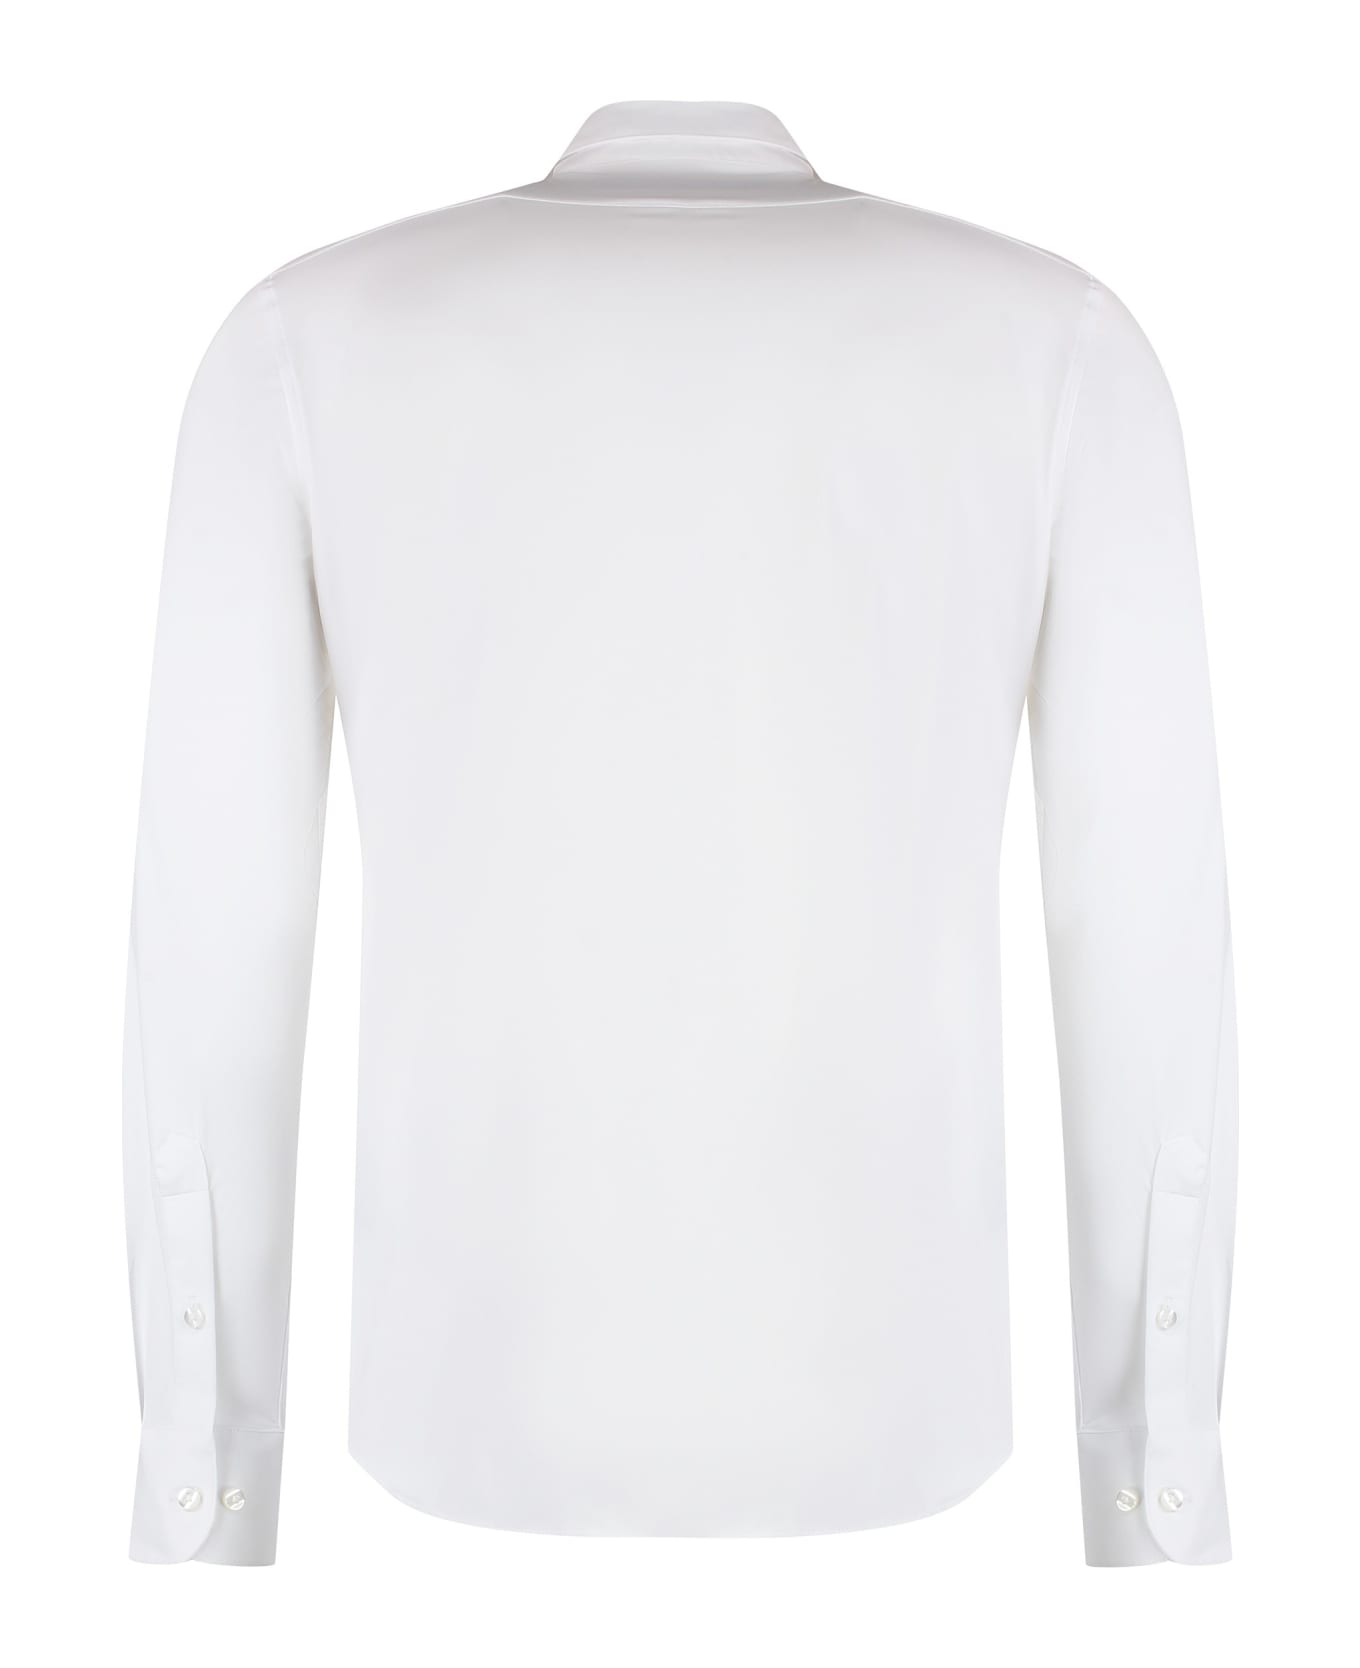 RRD - Roberto Ricci Design Technical Fabric Shirt - Bianco シャツ